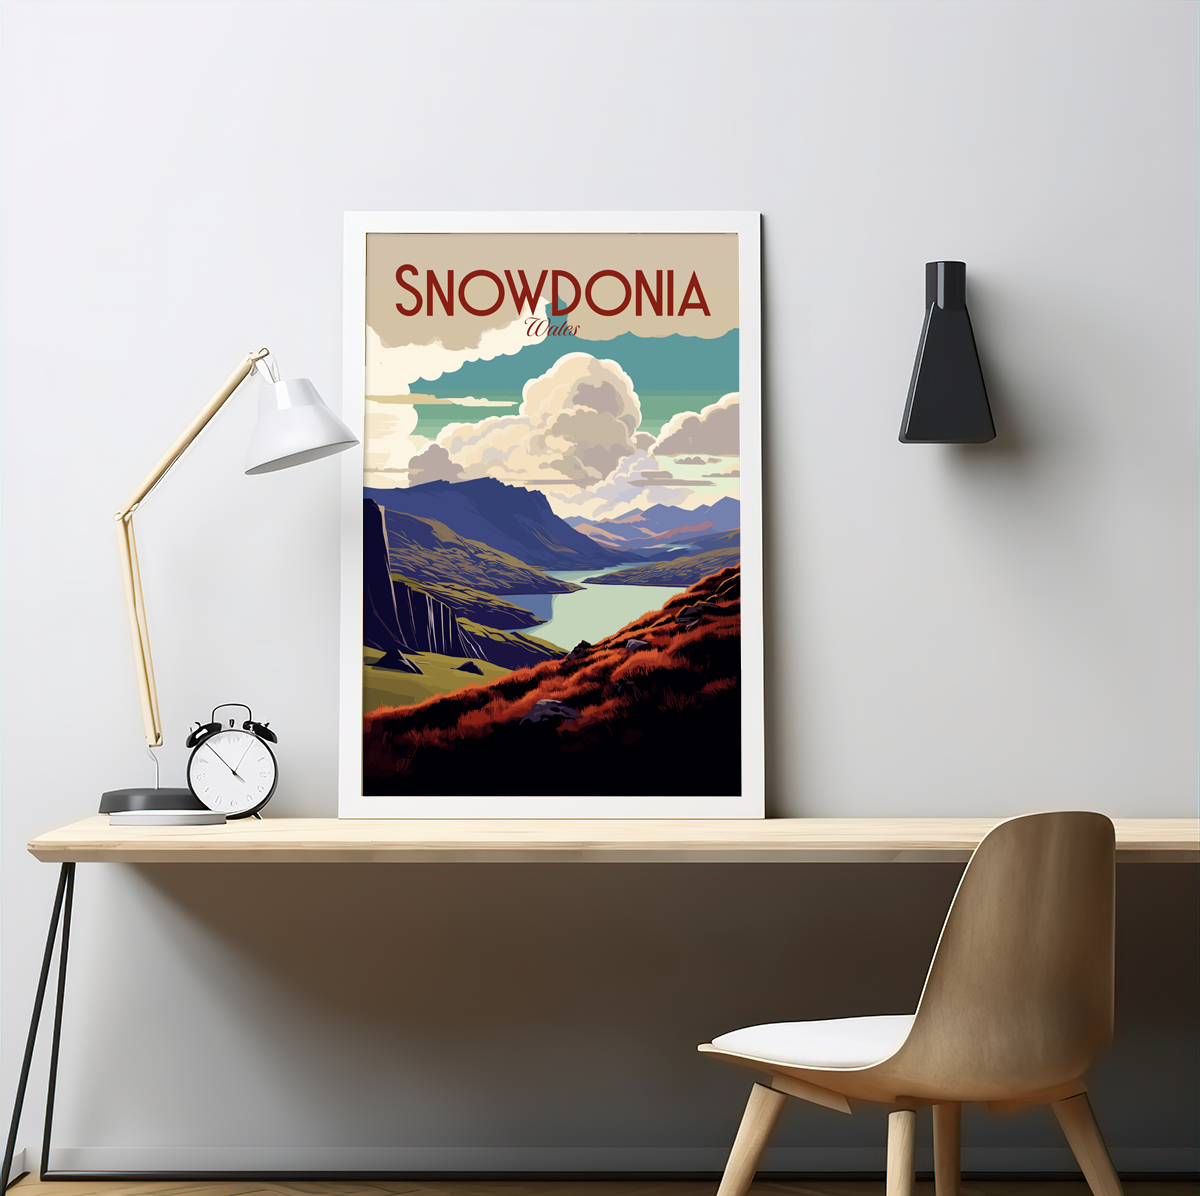 Snowdonia | Póster de viaje